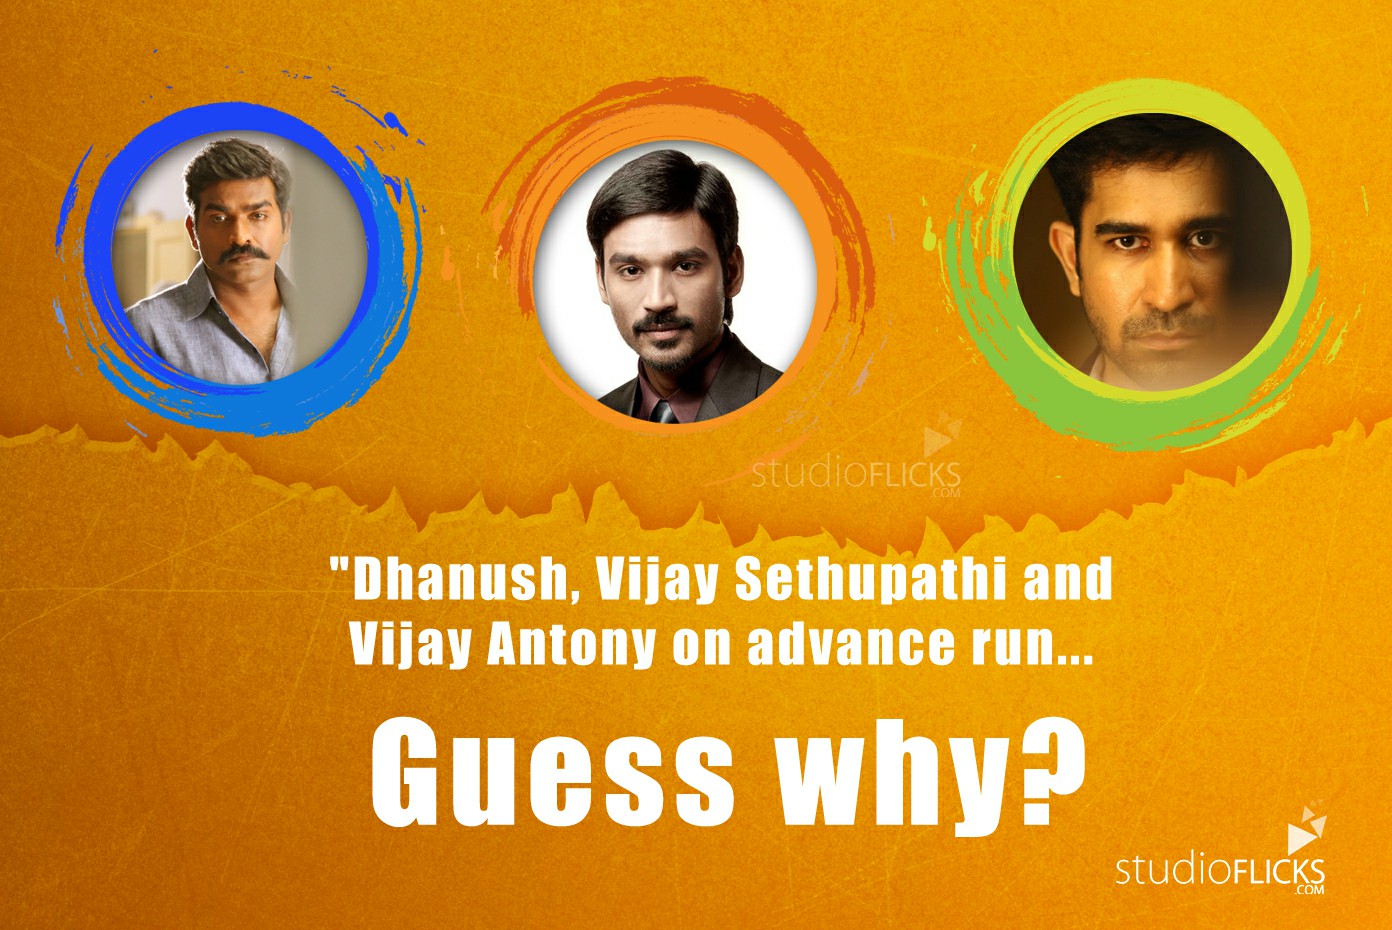 Dhanush, Vijay Sethupathi and Vijay Antony on advance run... Guess why?